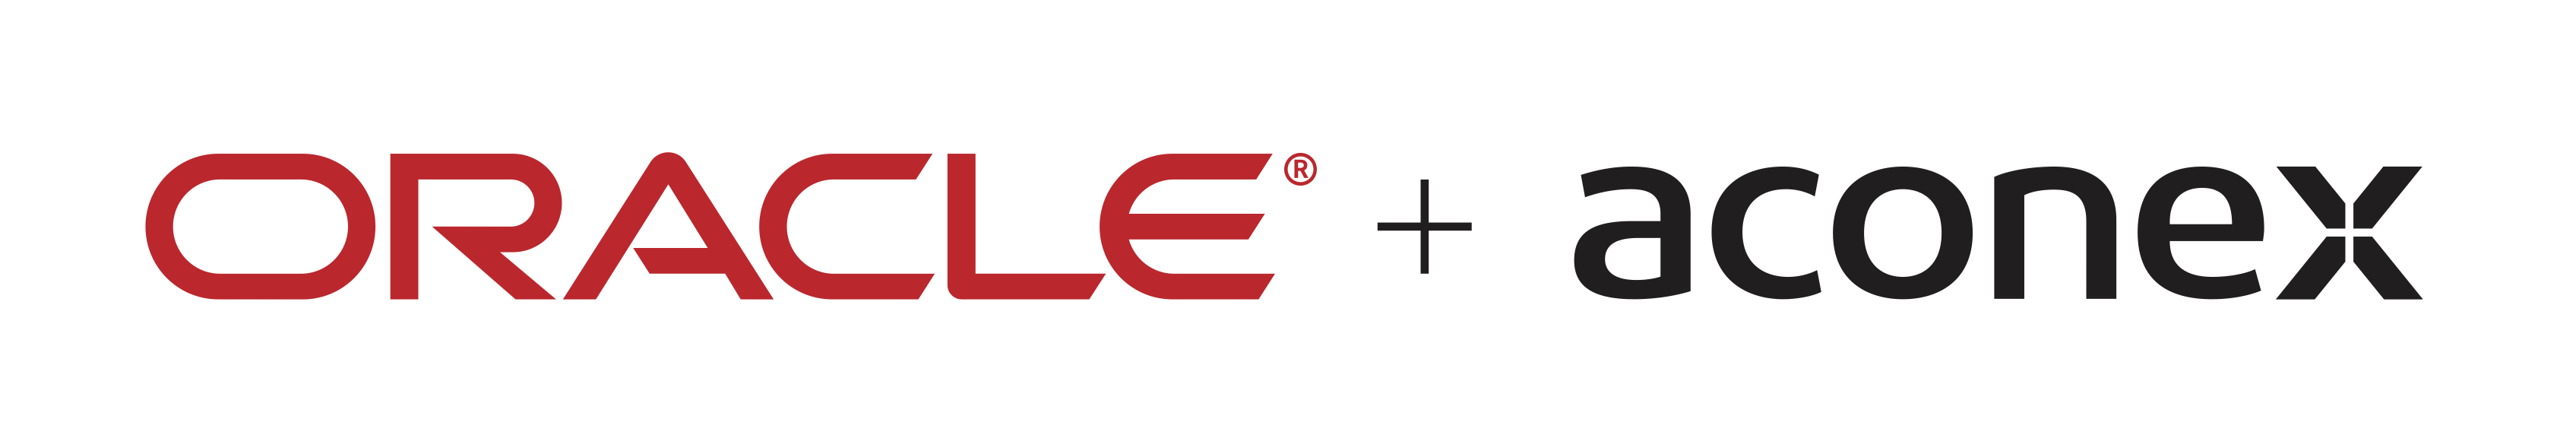 Aconex-logo